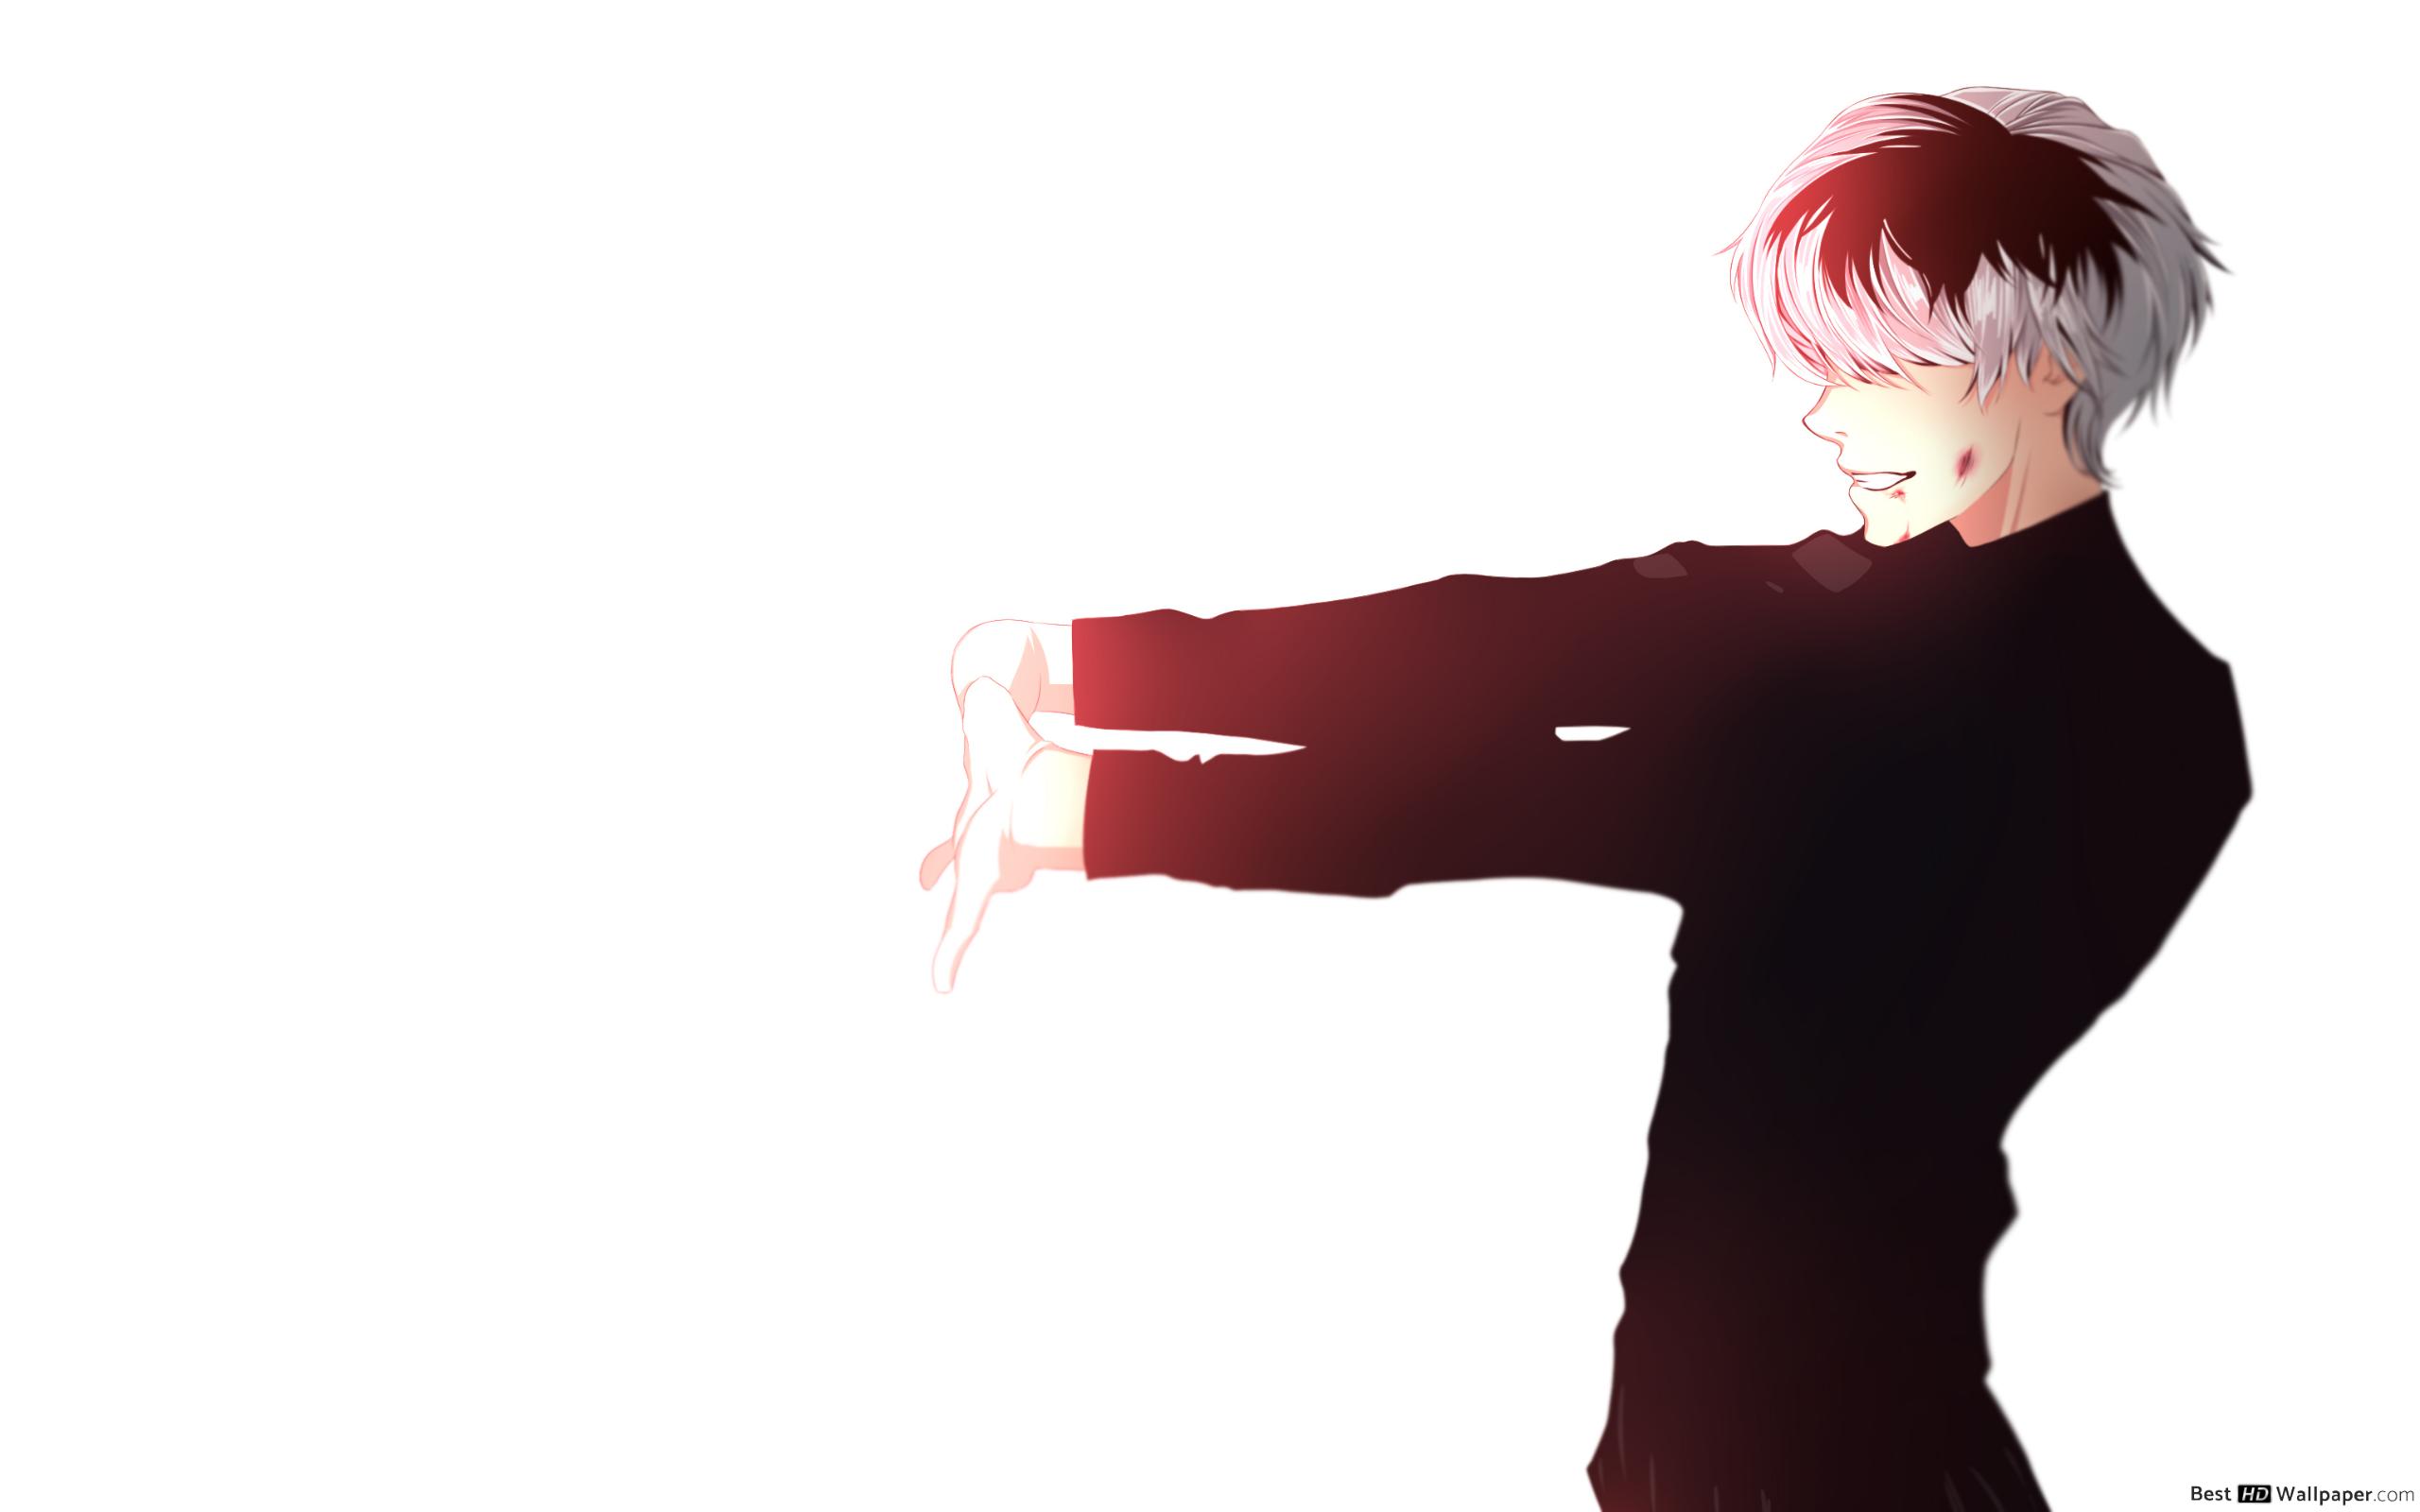 kaneki wallpaper,anime,standing,muscle,gesture,illustration